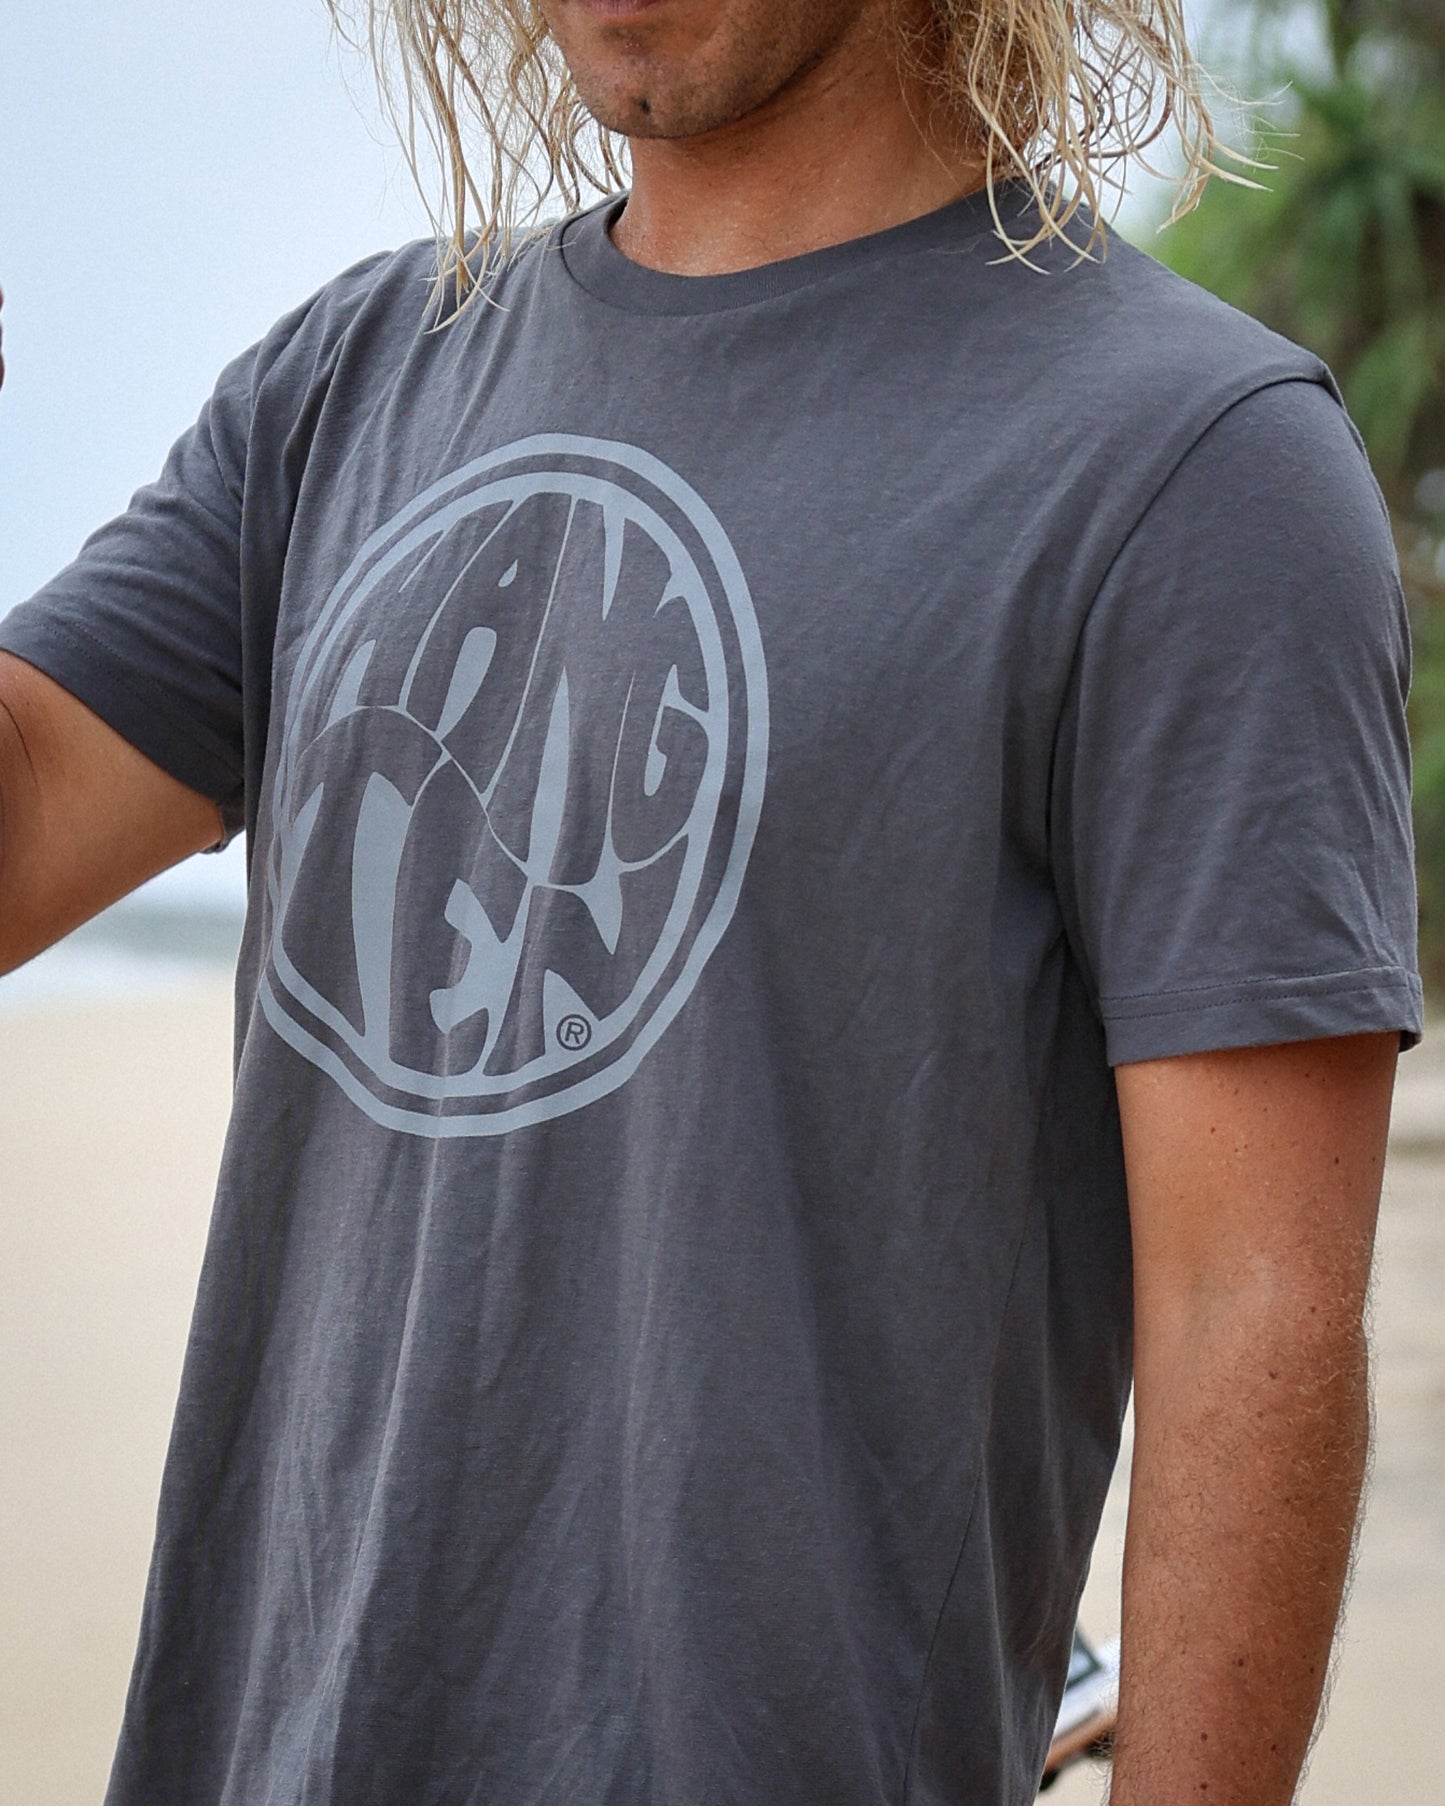 Hang Ten Surfer T-shirt - Anthracite Gray